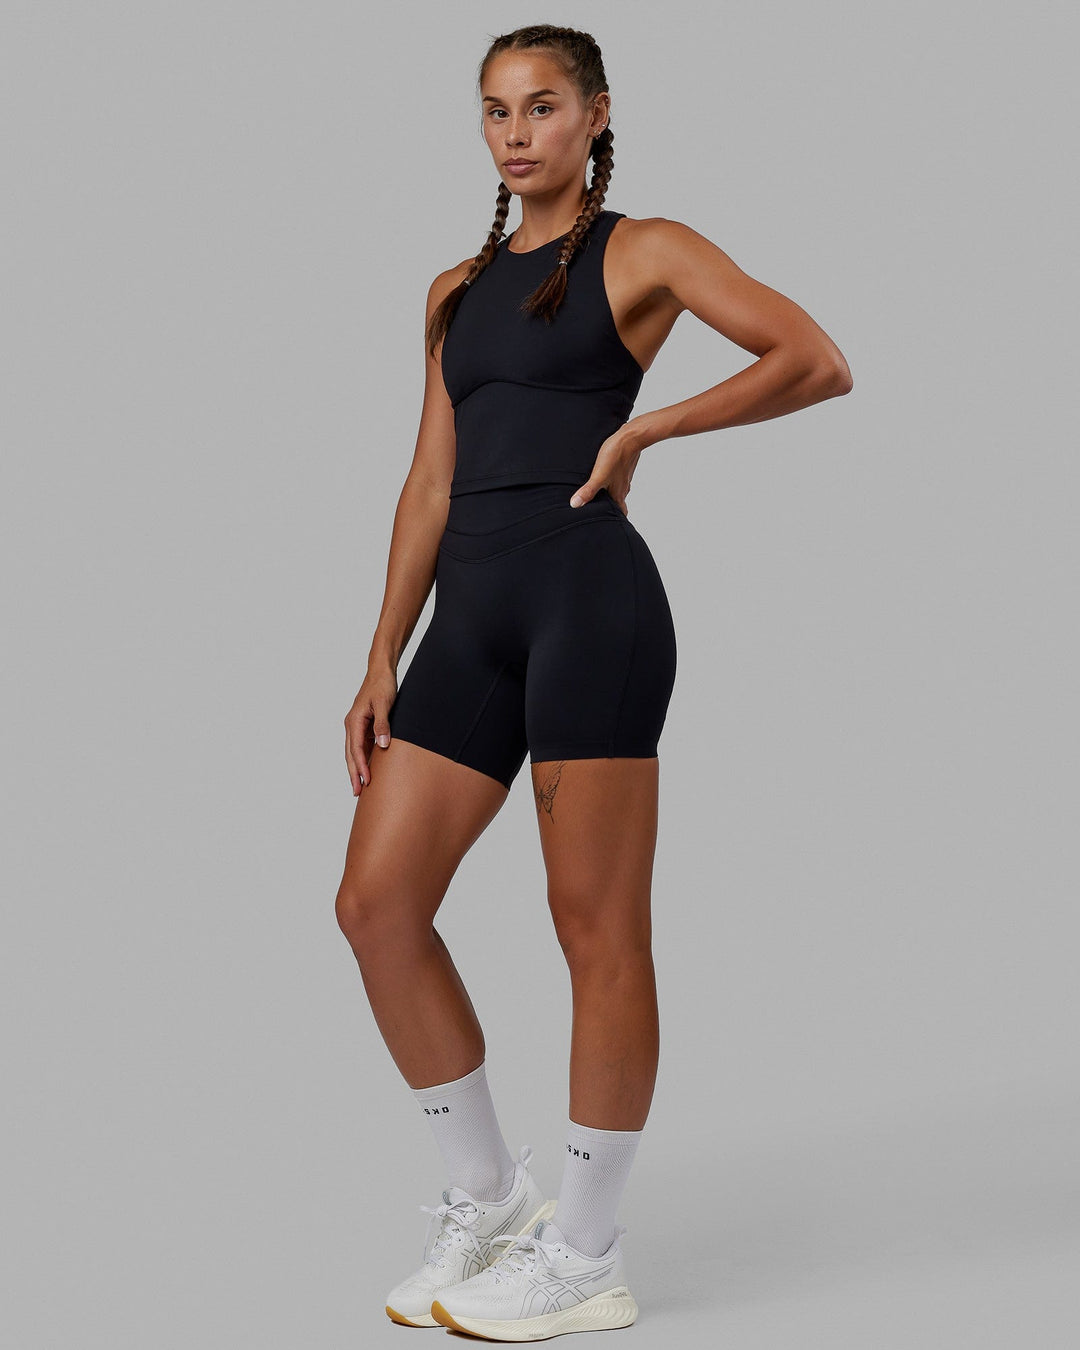 Woman wearing Enhance Mid Short Tights - Black